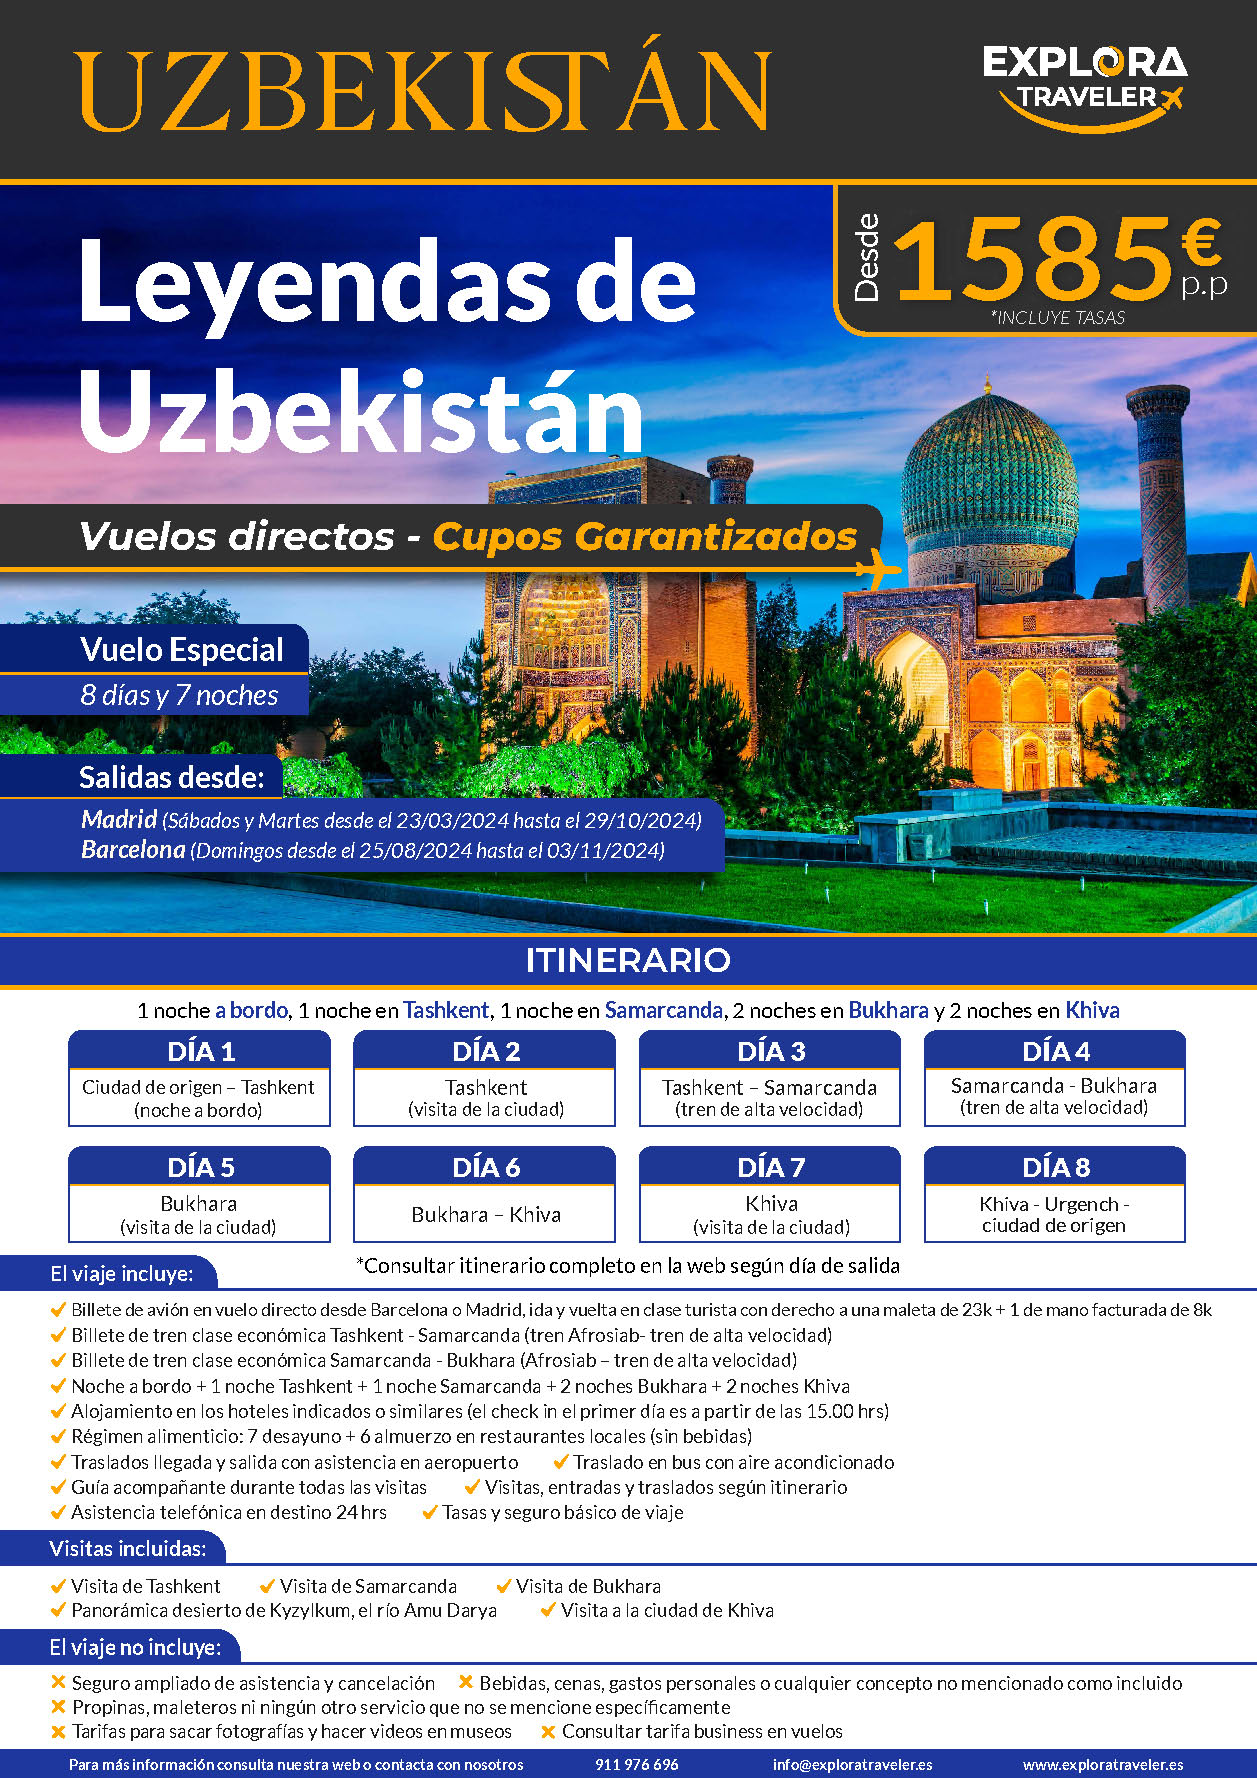 Oferta Explora Traveler circuito Leyendas de Uzbekistan 8 dias salidas Marzo a Octubre 2024 vuelo directo desde Madrid y Barcelona